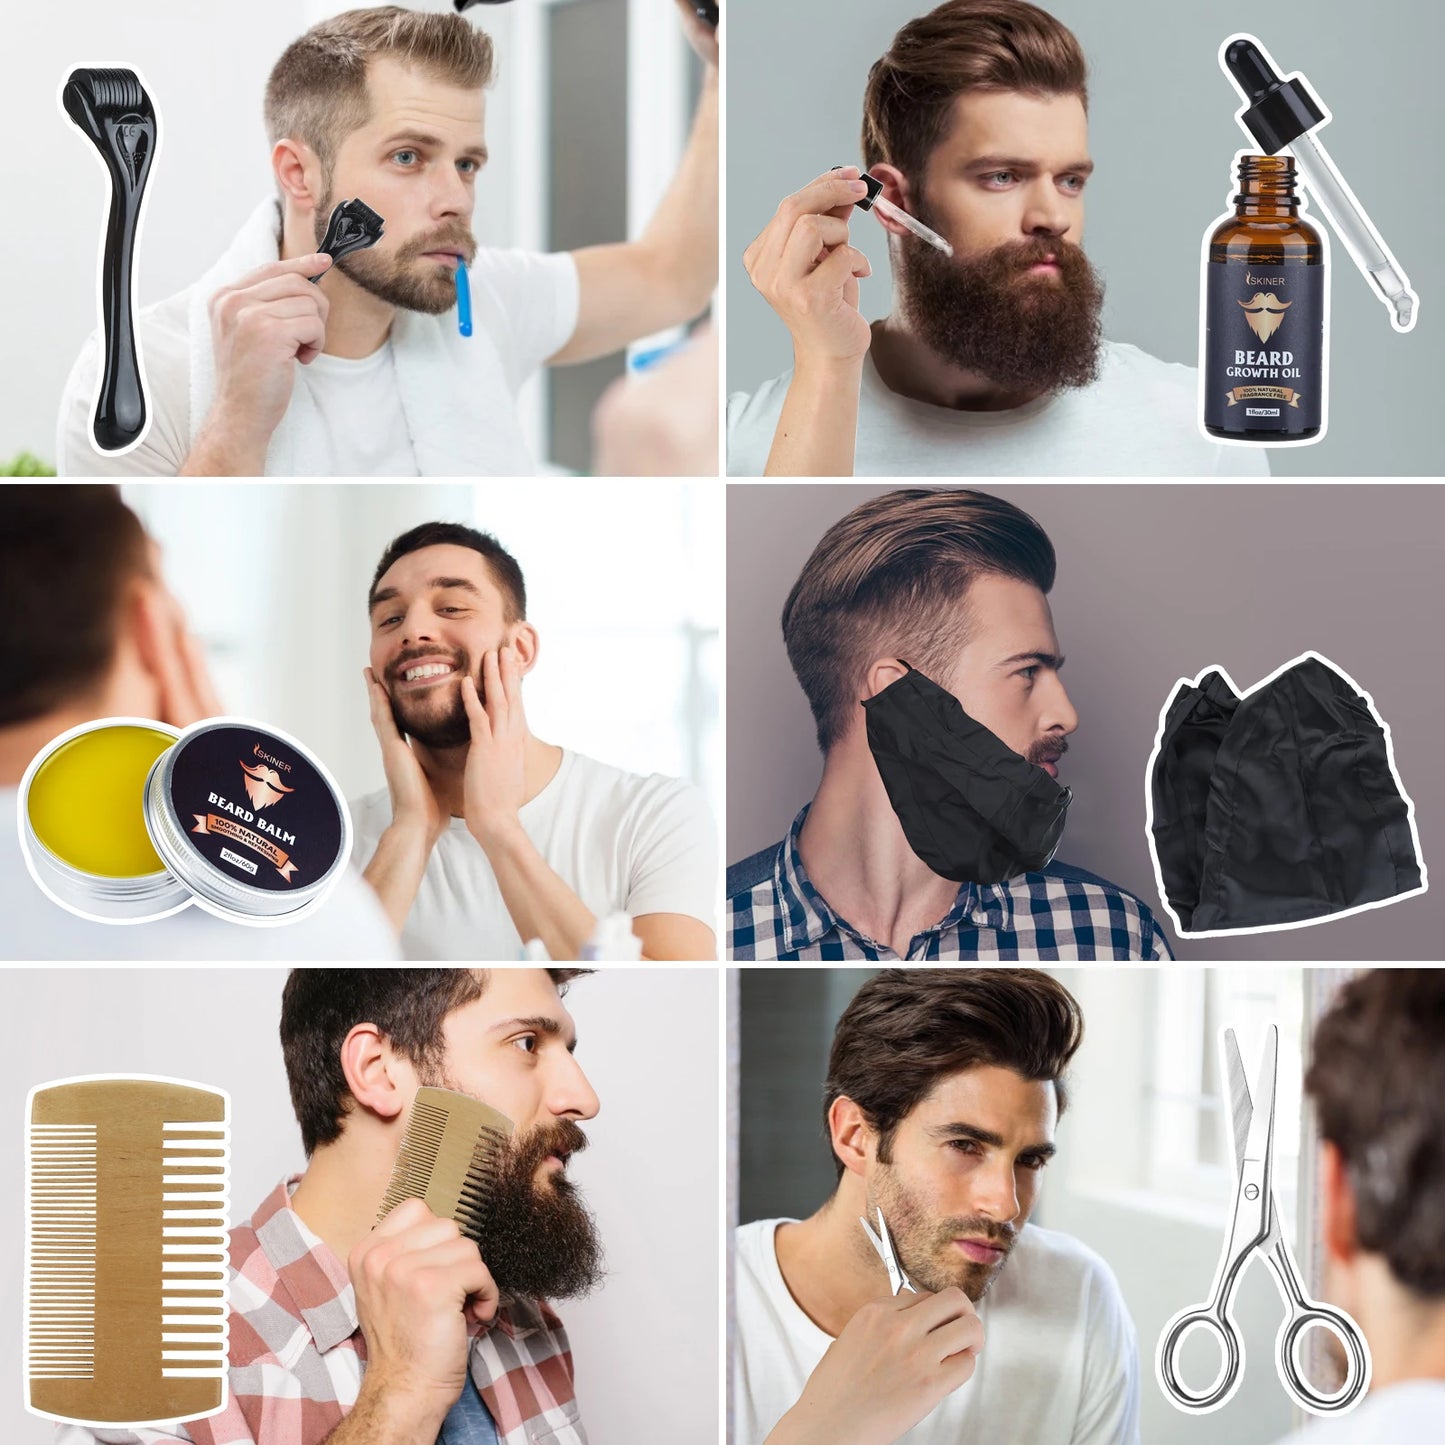 Beard Growth Kit Beard Hair Enhancer Growth Thickening Activator Serum Beard Oil, Beard Balm, Bamboo Brush Comb Beard Care Kit